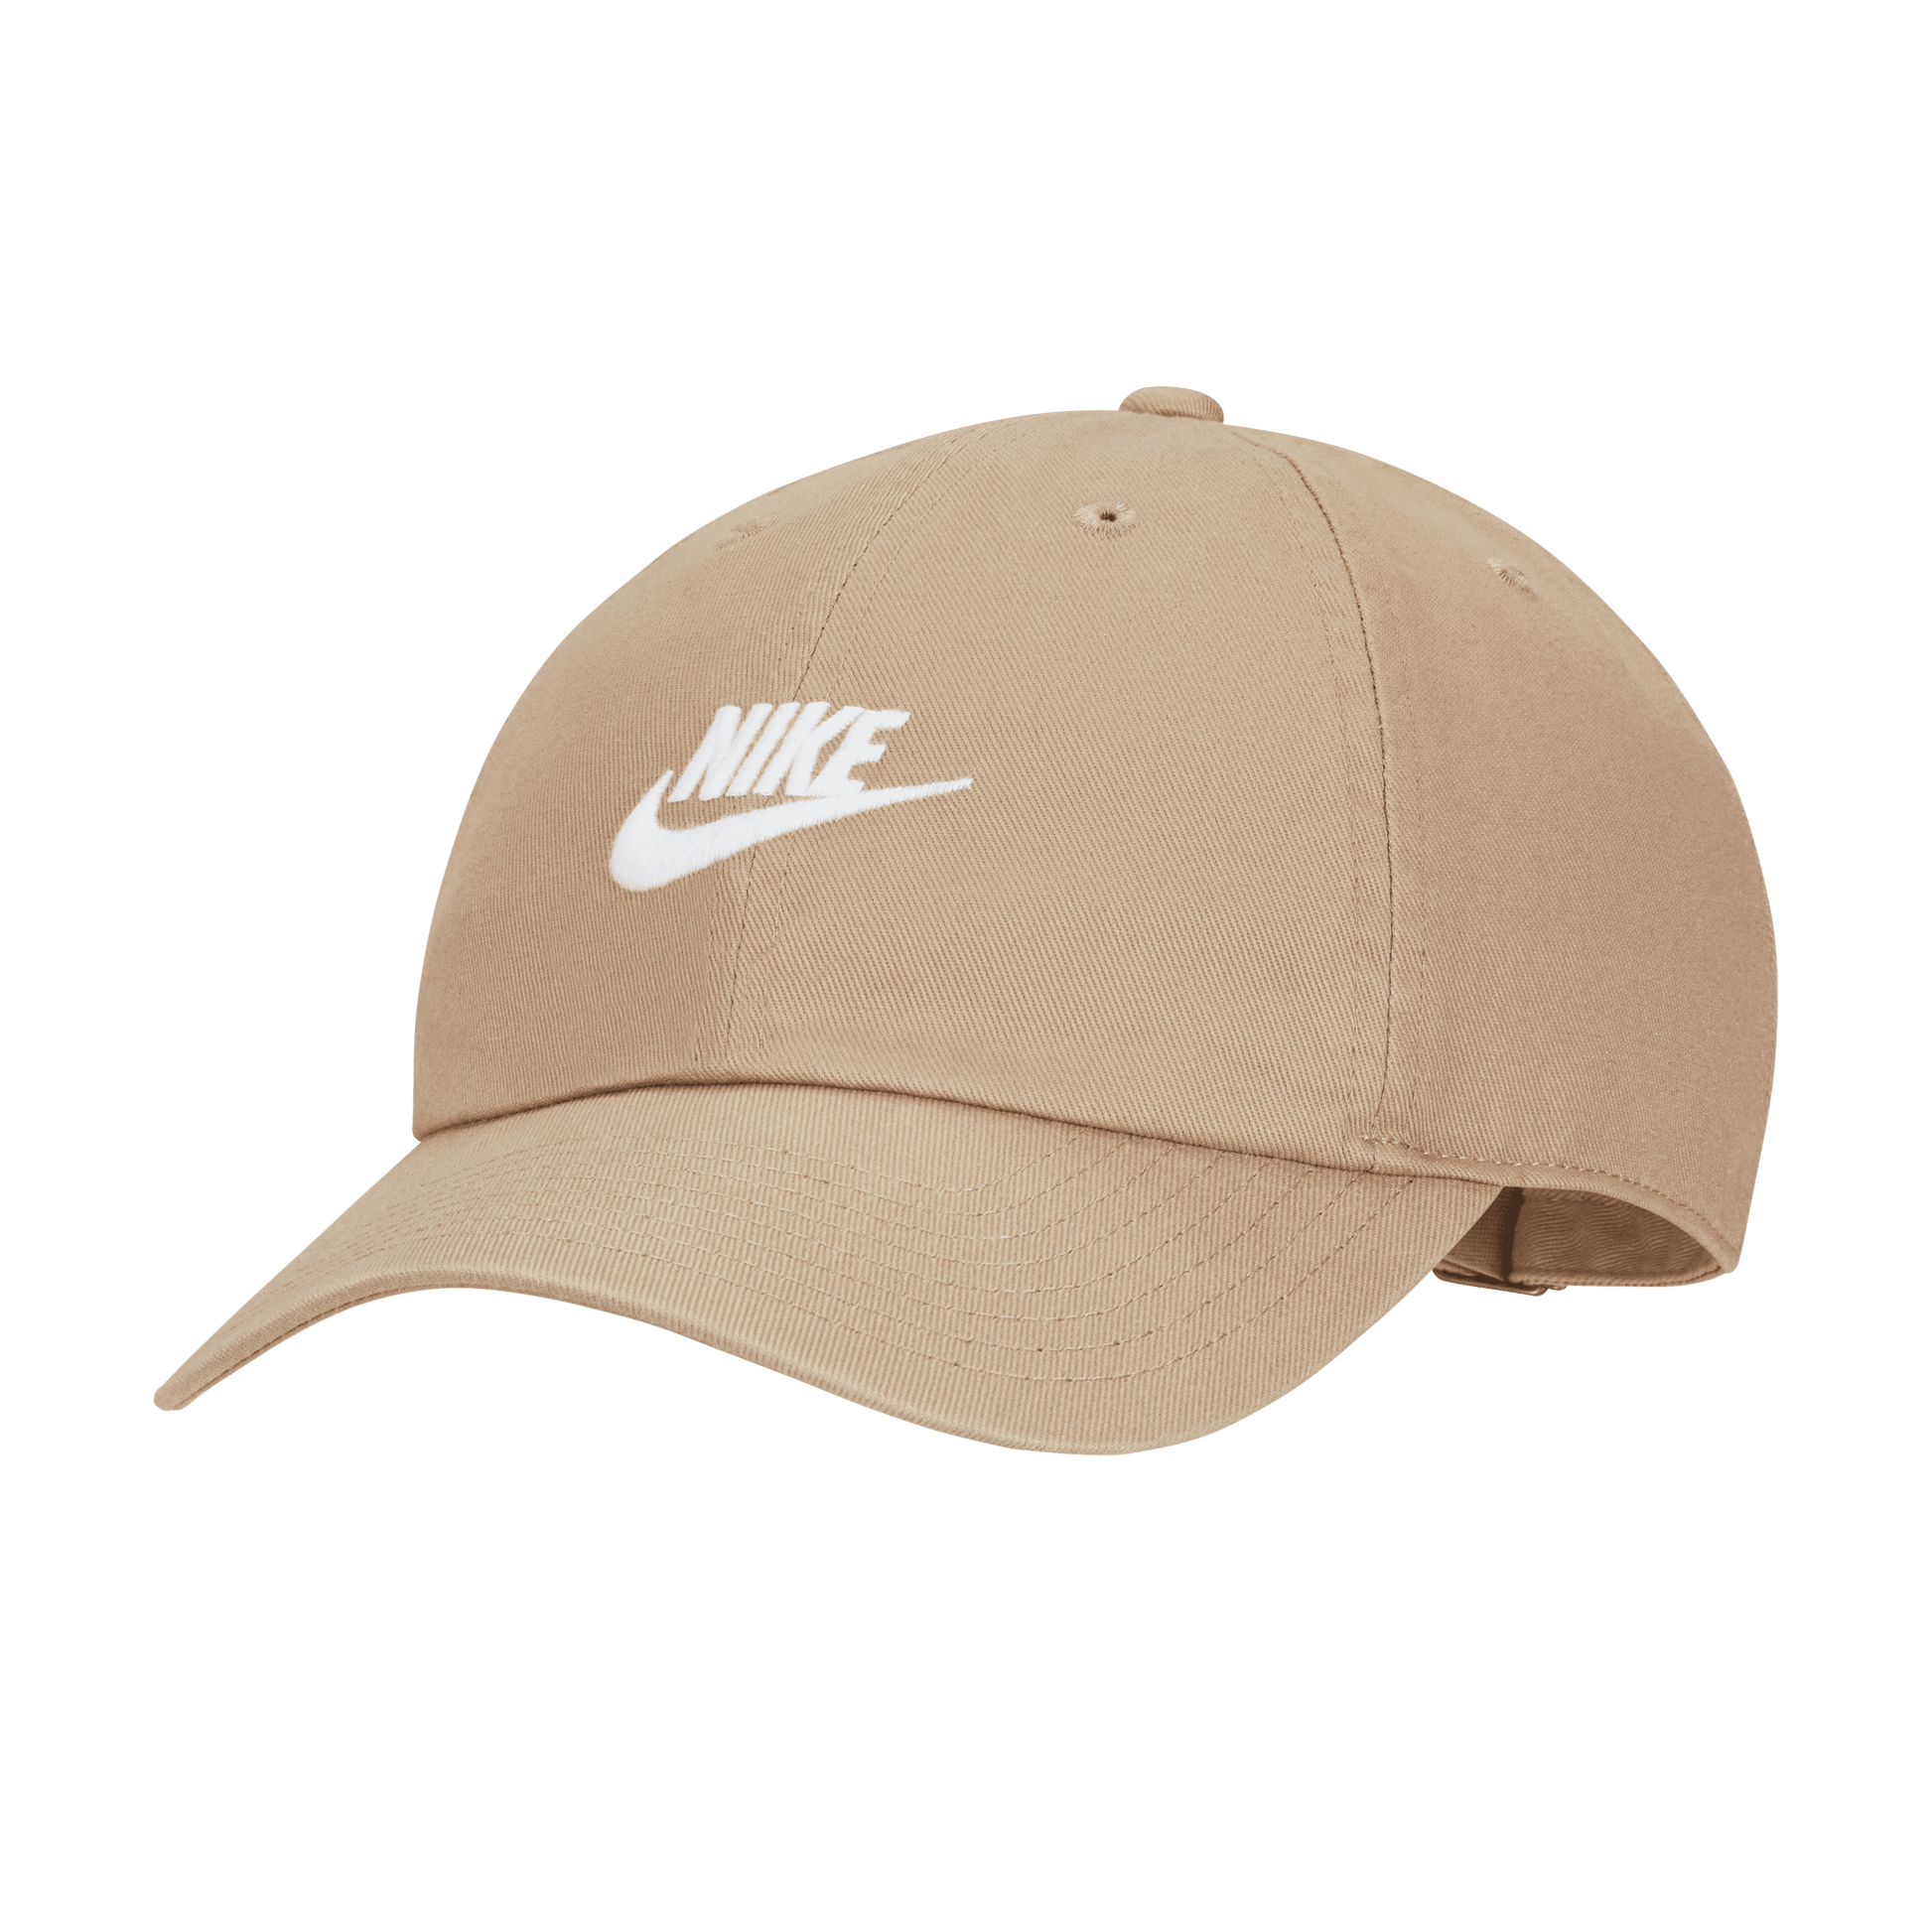 Nike Sportswear Heritage 86 Futura R Double Washed Kicks – Hat White Khaki